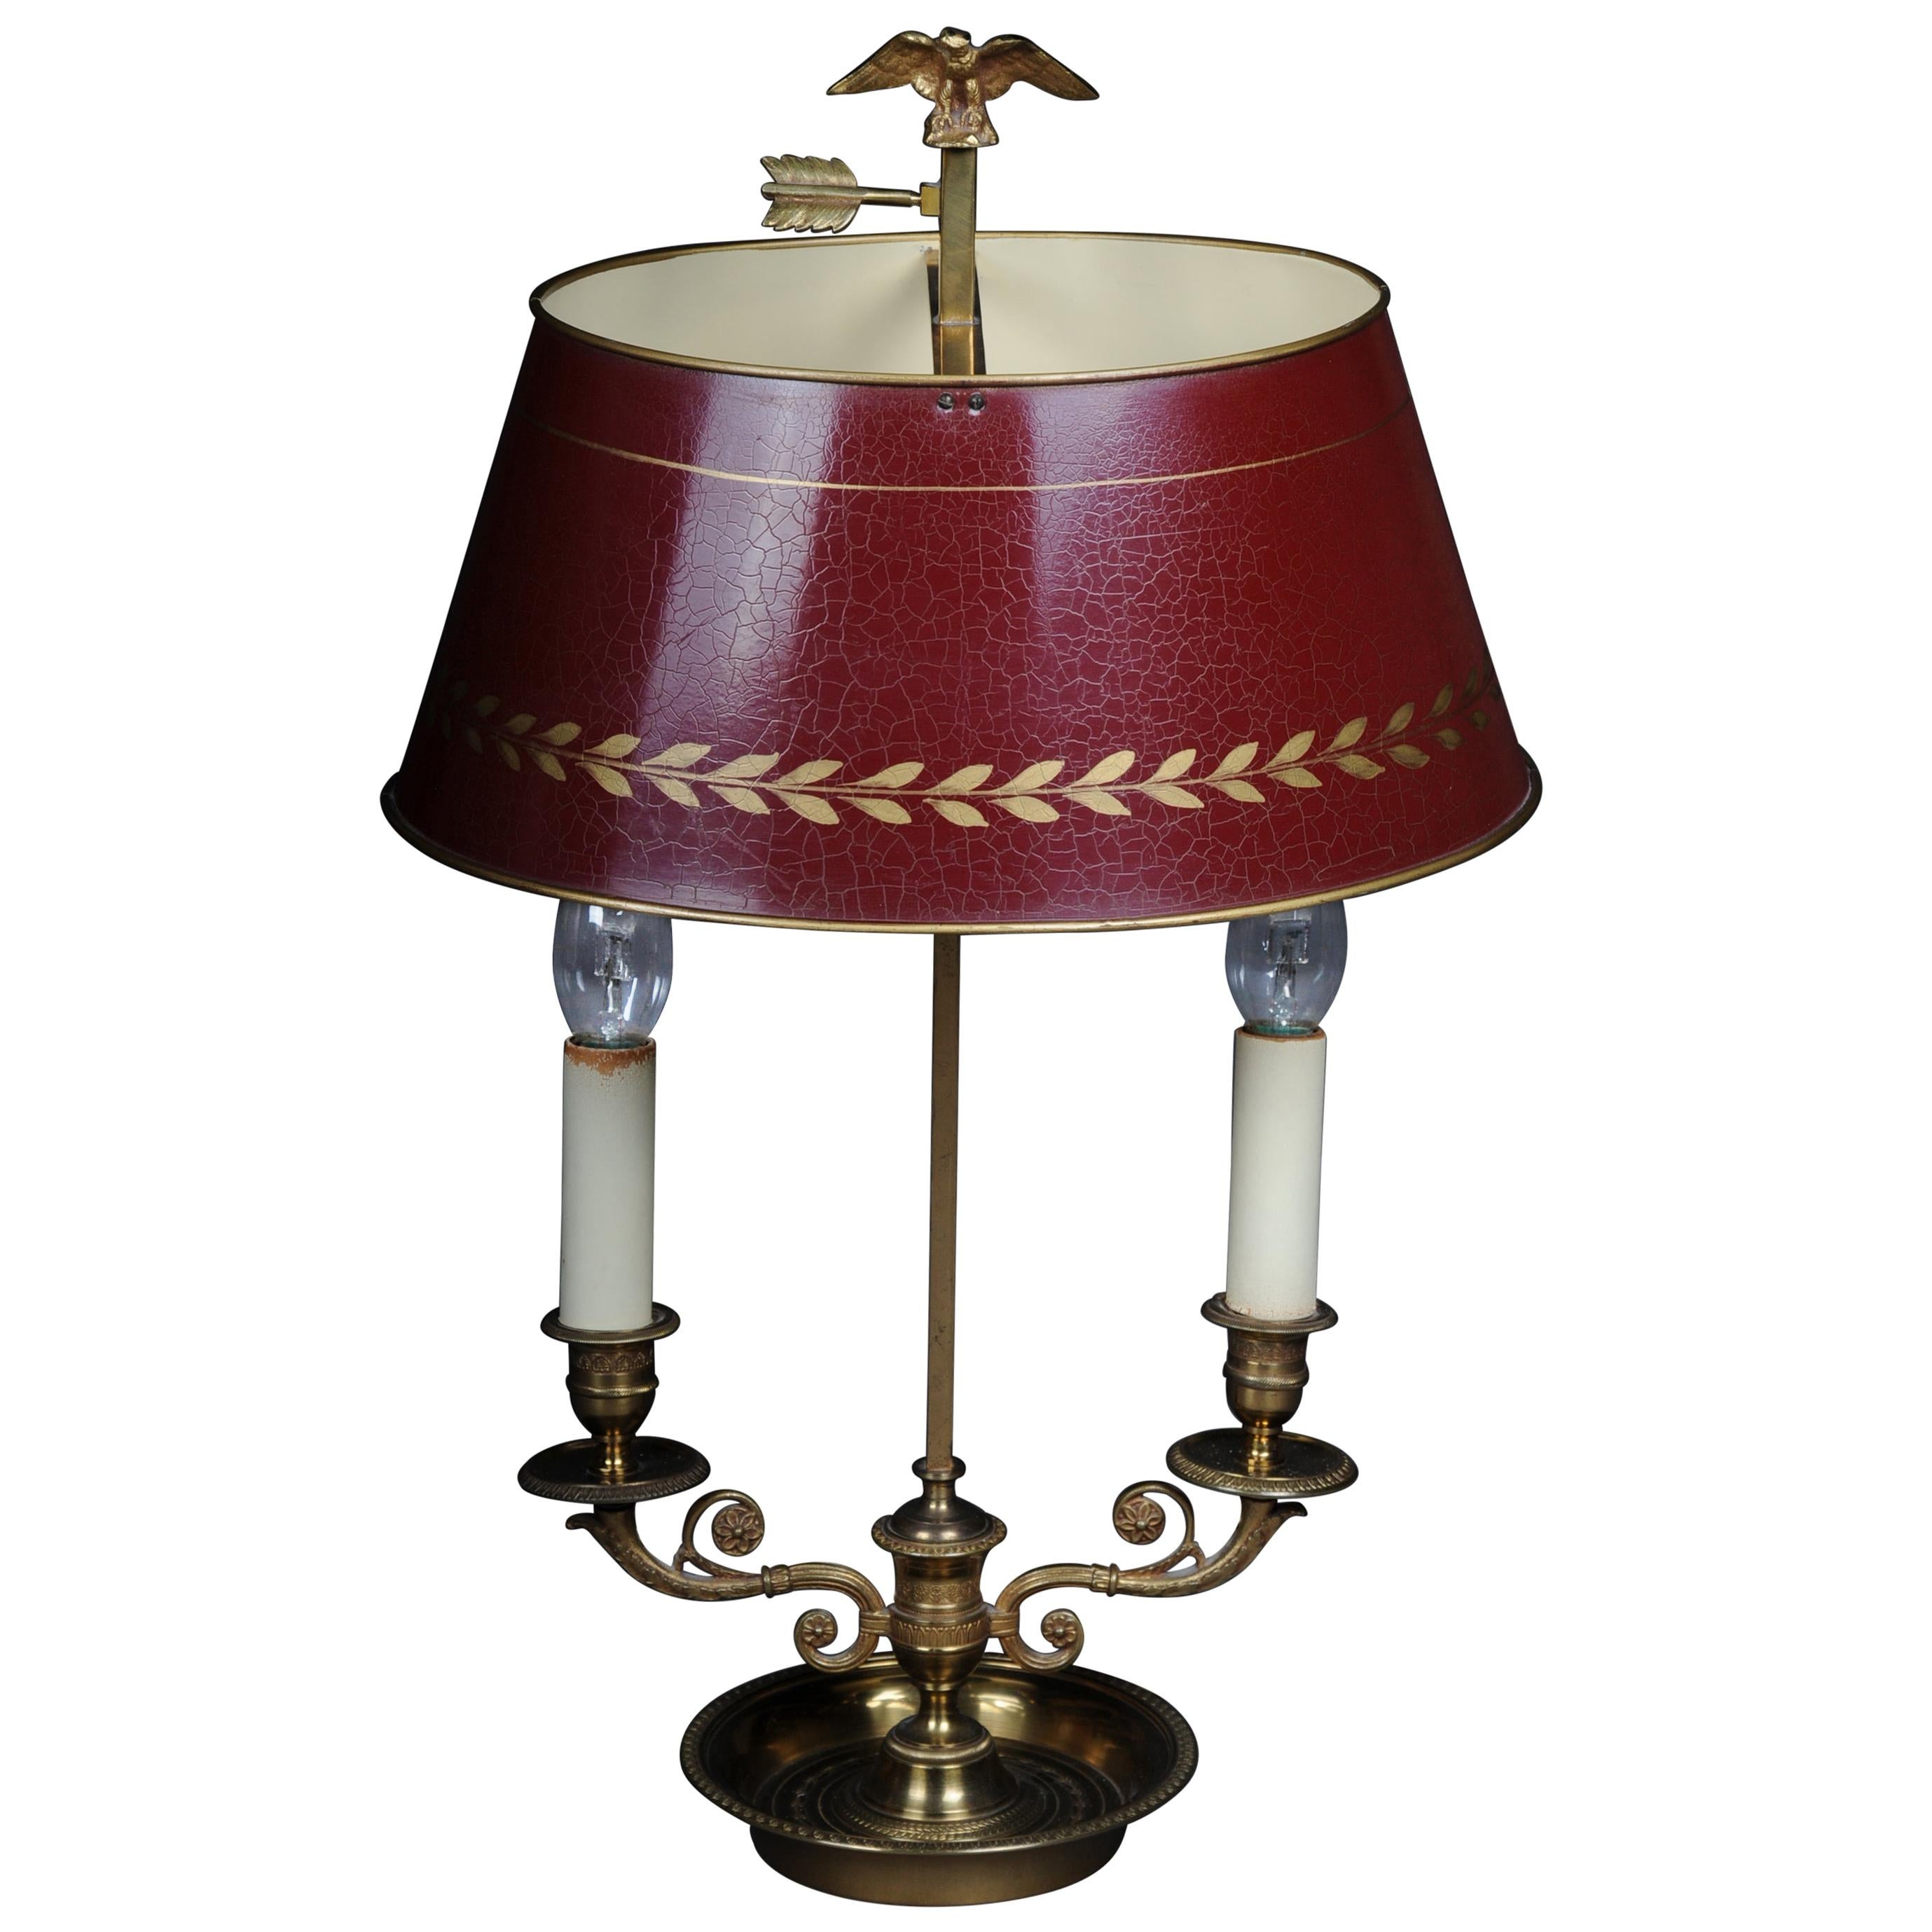 Antique Desk Lamp / Table Lamp Empire circa 1900, Gold-Plated Bronze